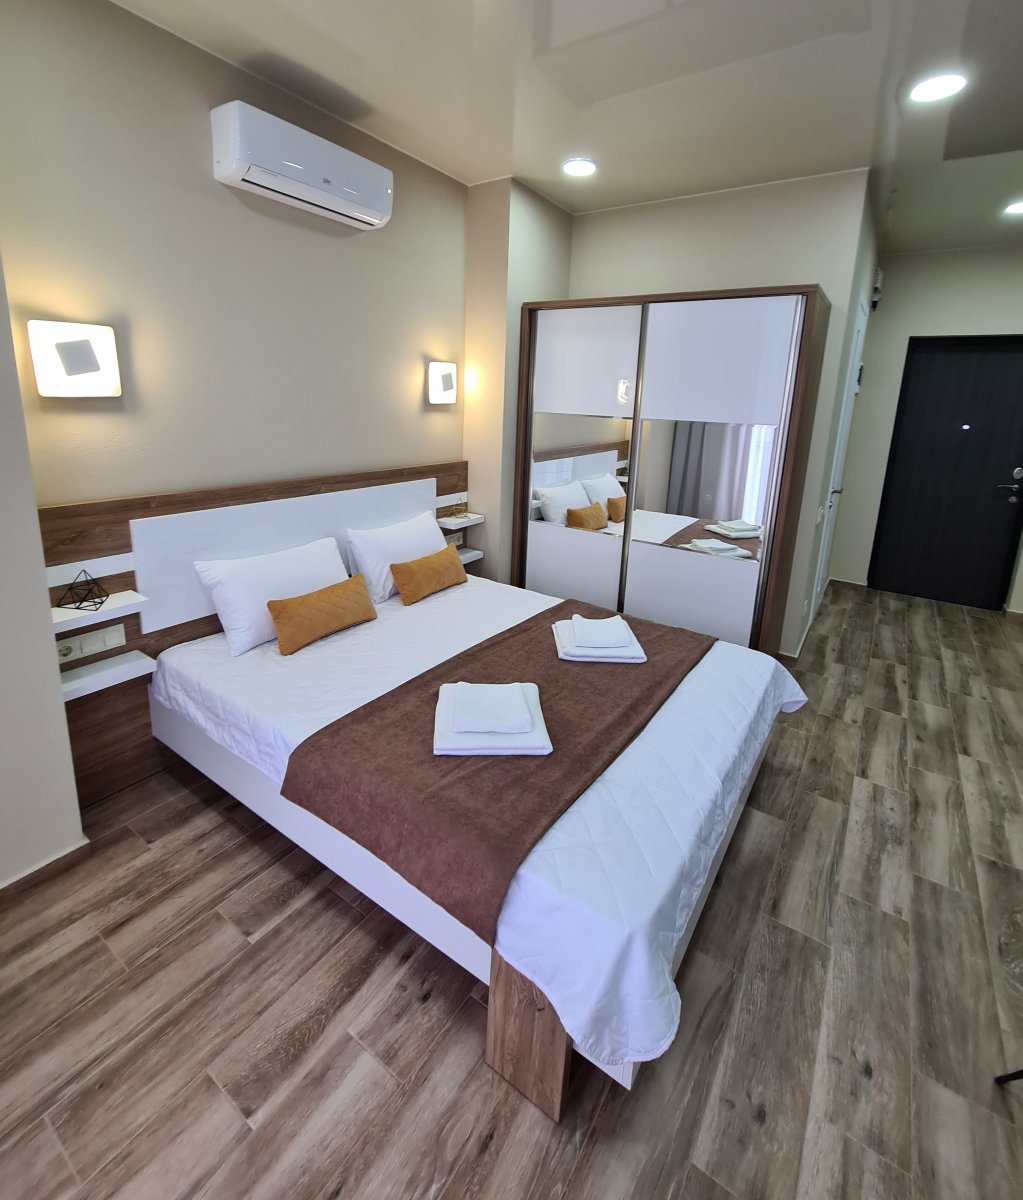 Standard Double room in hotel "Comfort Time 17" # 1704 id-1014 - Batumi Vacation Rentals